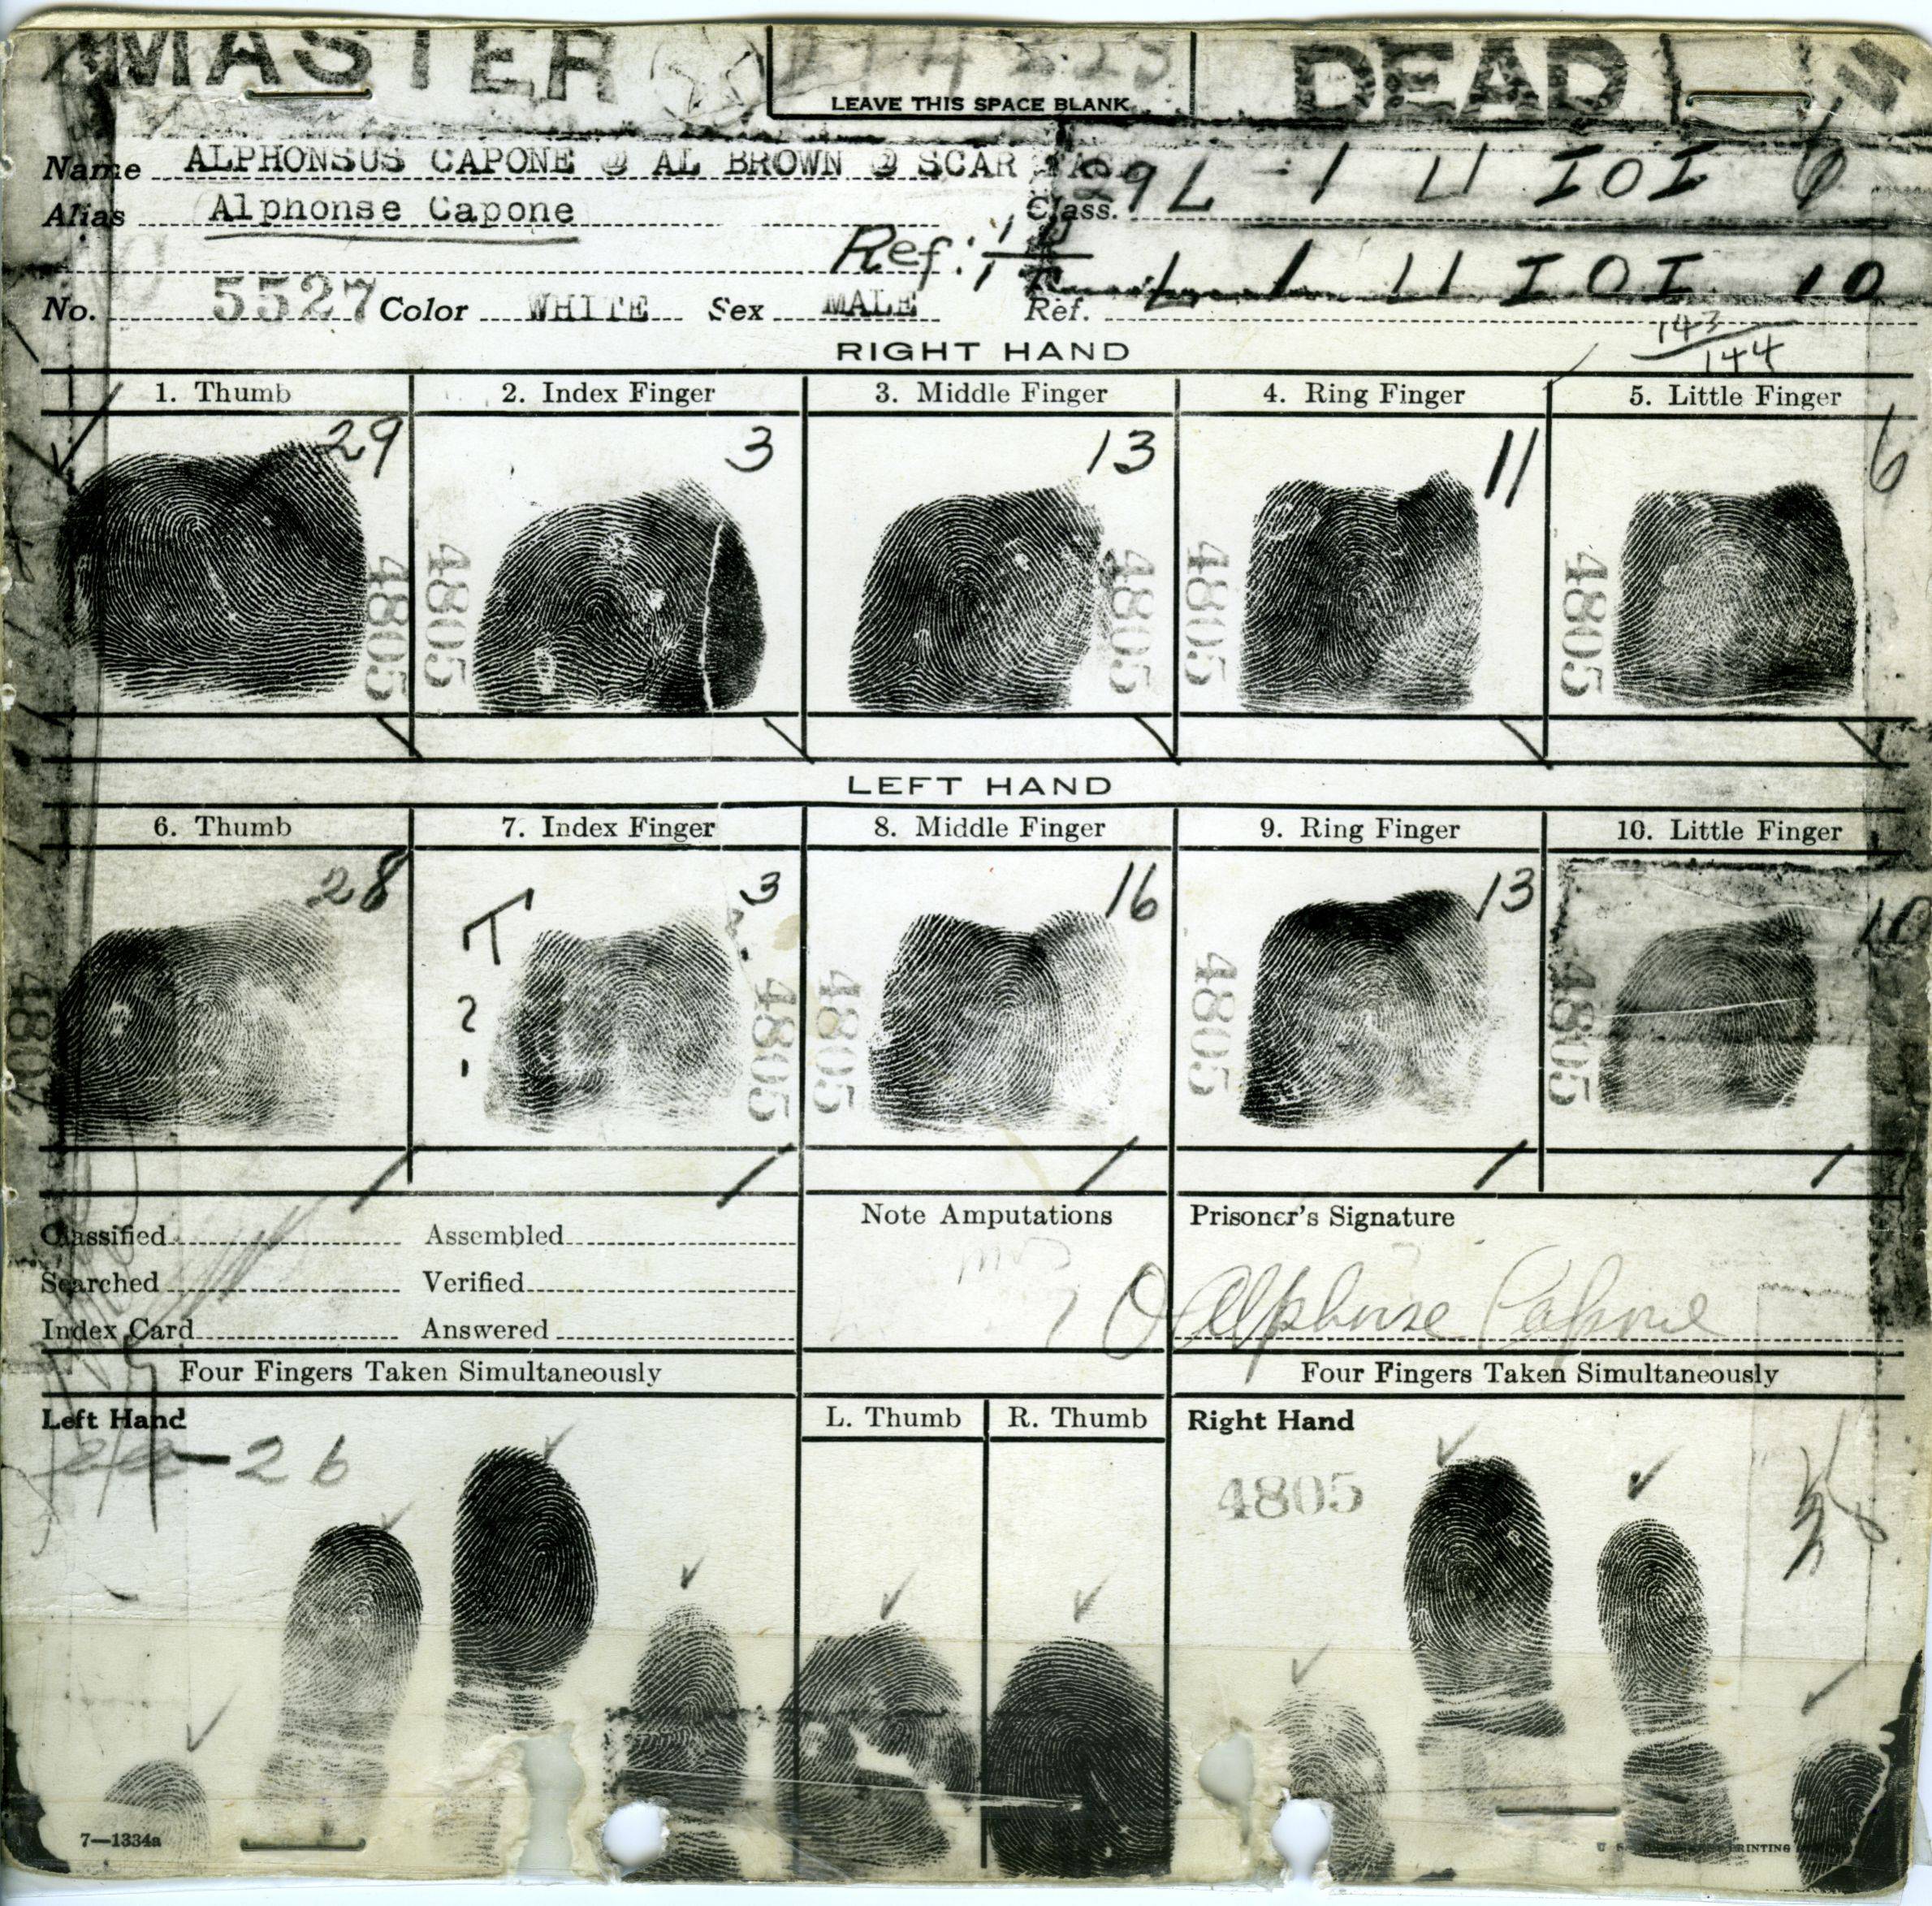 Al Capone’s fingerprint card, before 1947